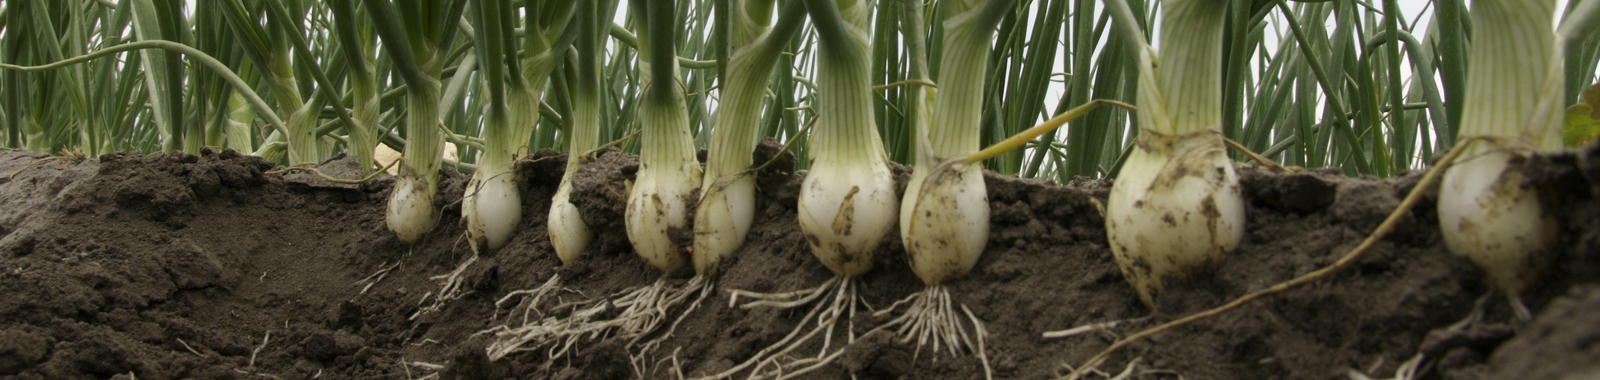 Increasing Onion Bulb Size